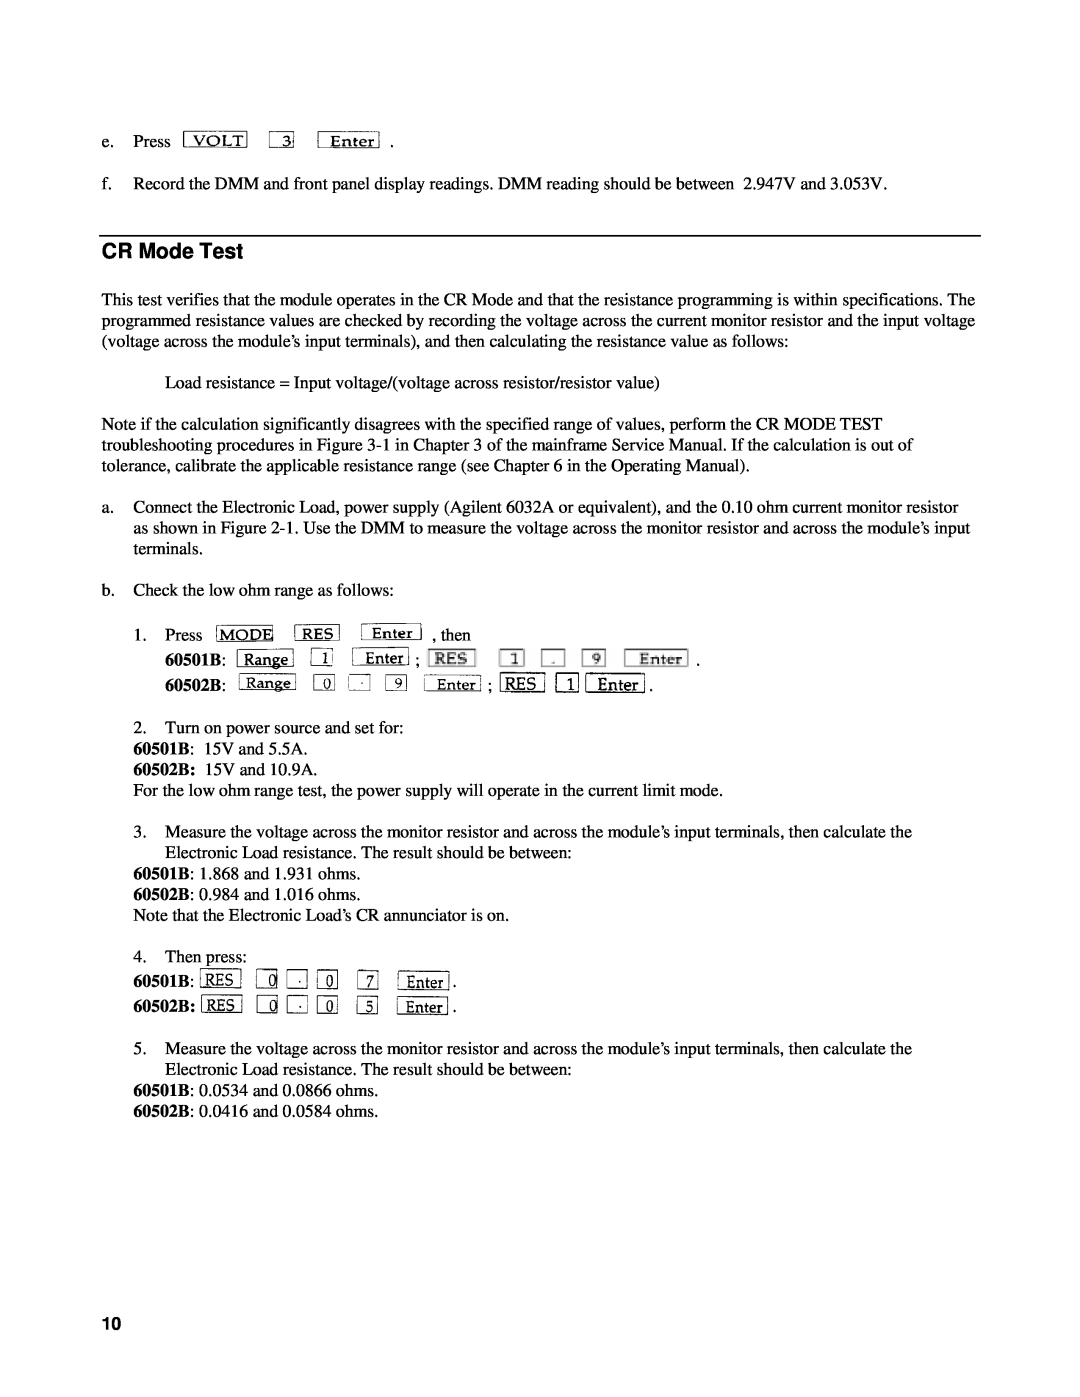 Agilent Technologies service manual CR Mode Test, 60501B 60502B 